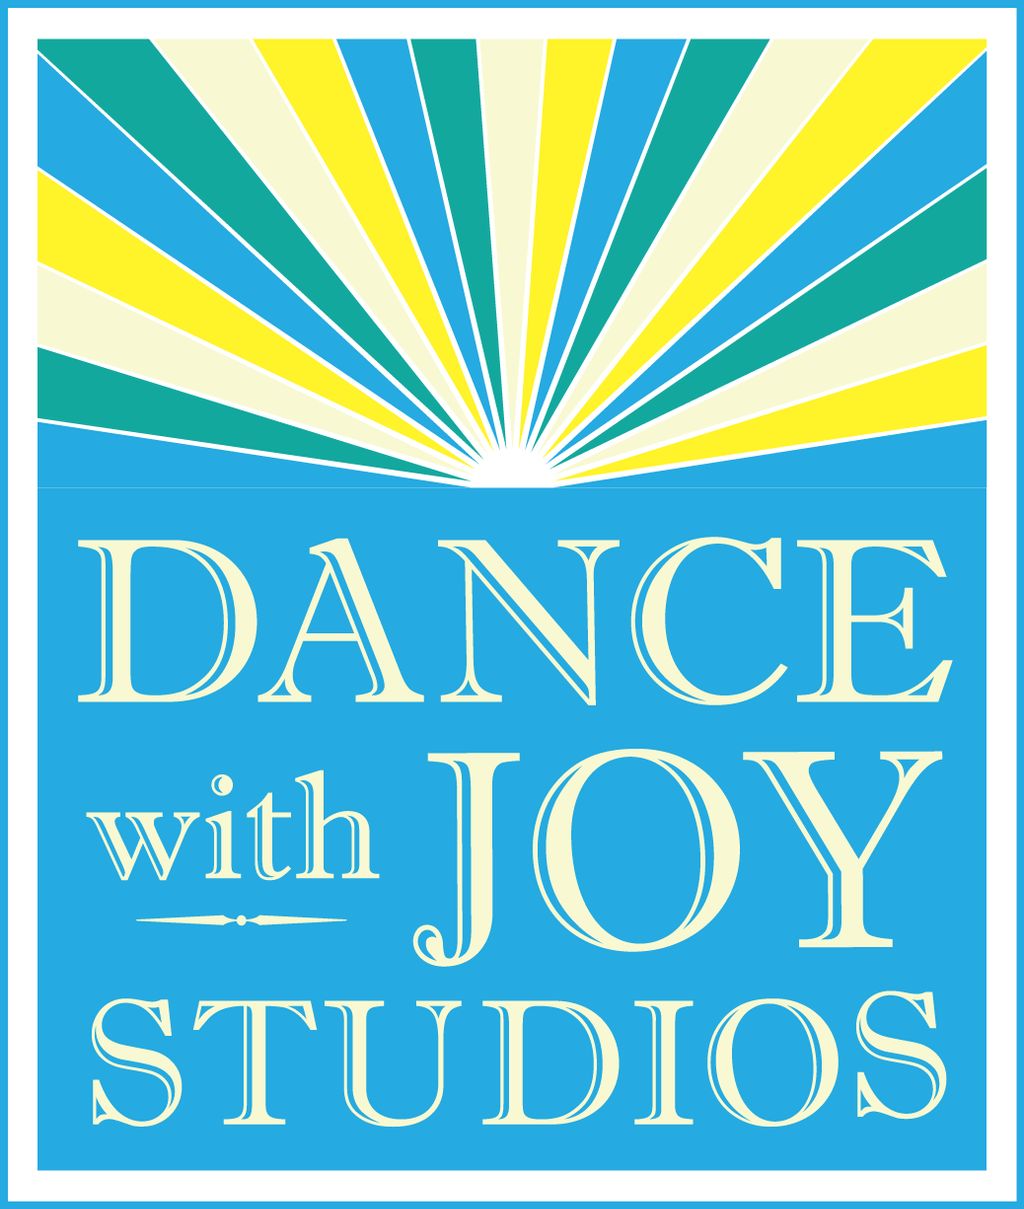 Dance with Joy Studios